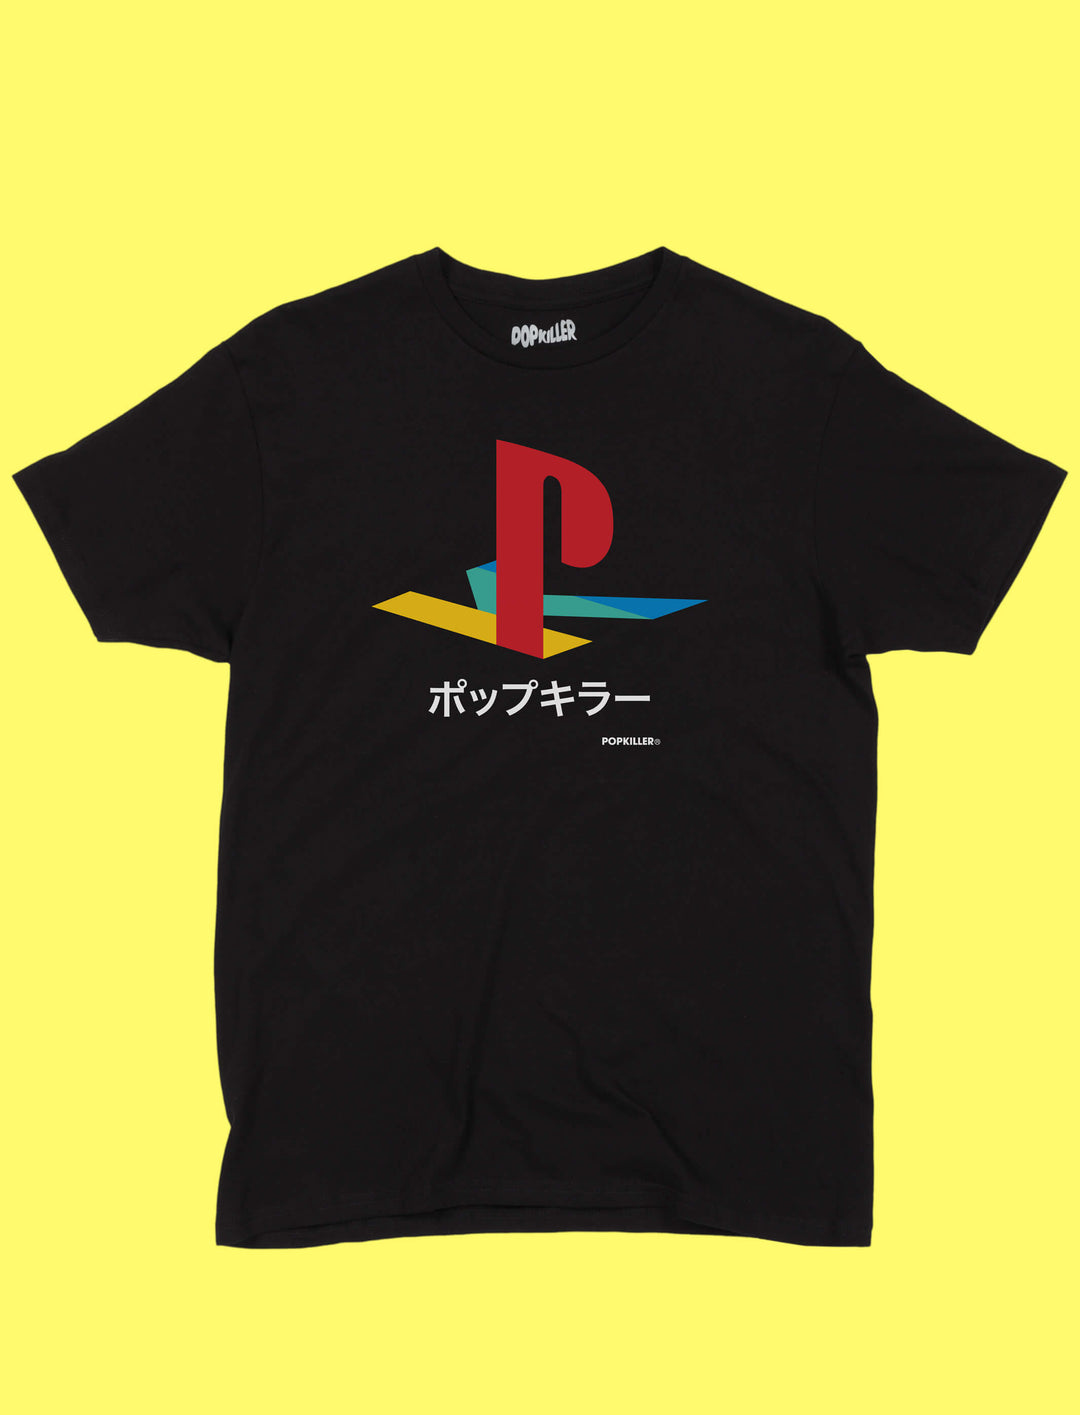 Retro Playstation gaming graphic t-shirt.